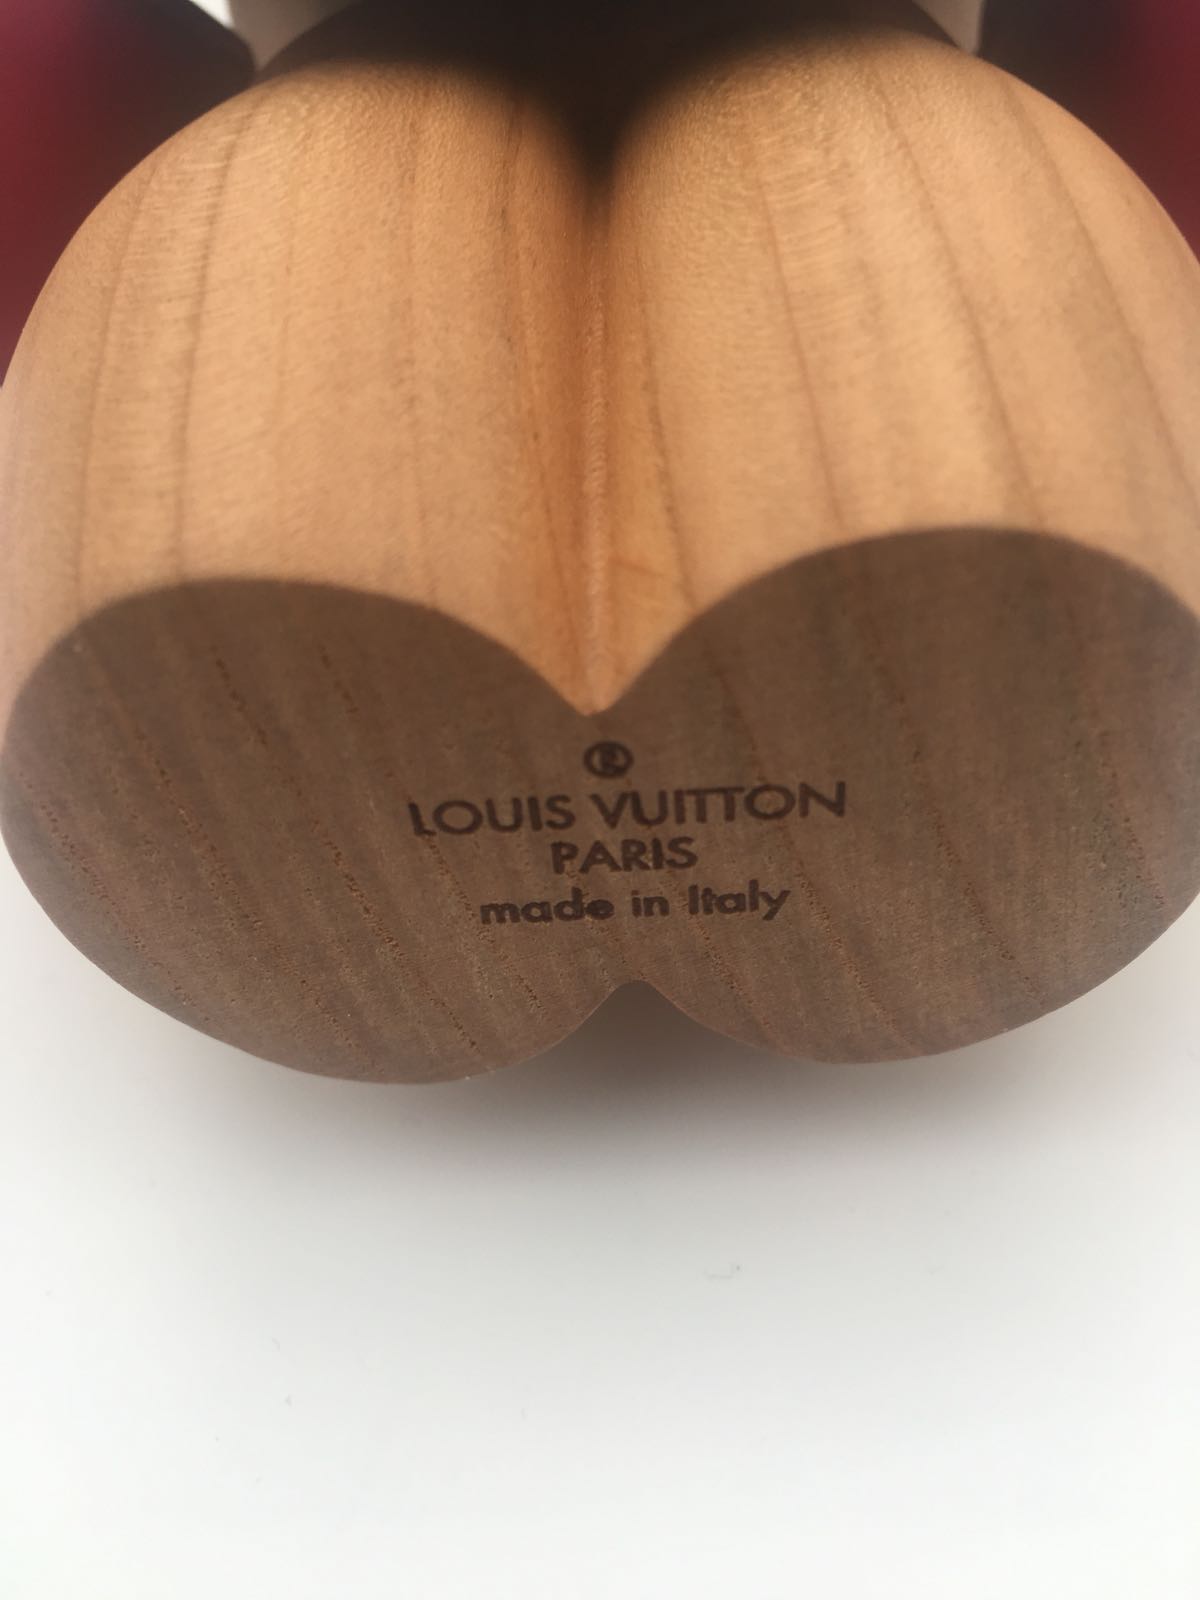 Louis Vuitton VIVIENNE Doll Wood and Titanium Canvas GI0279 Rare Collectible